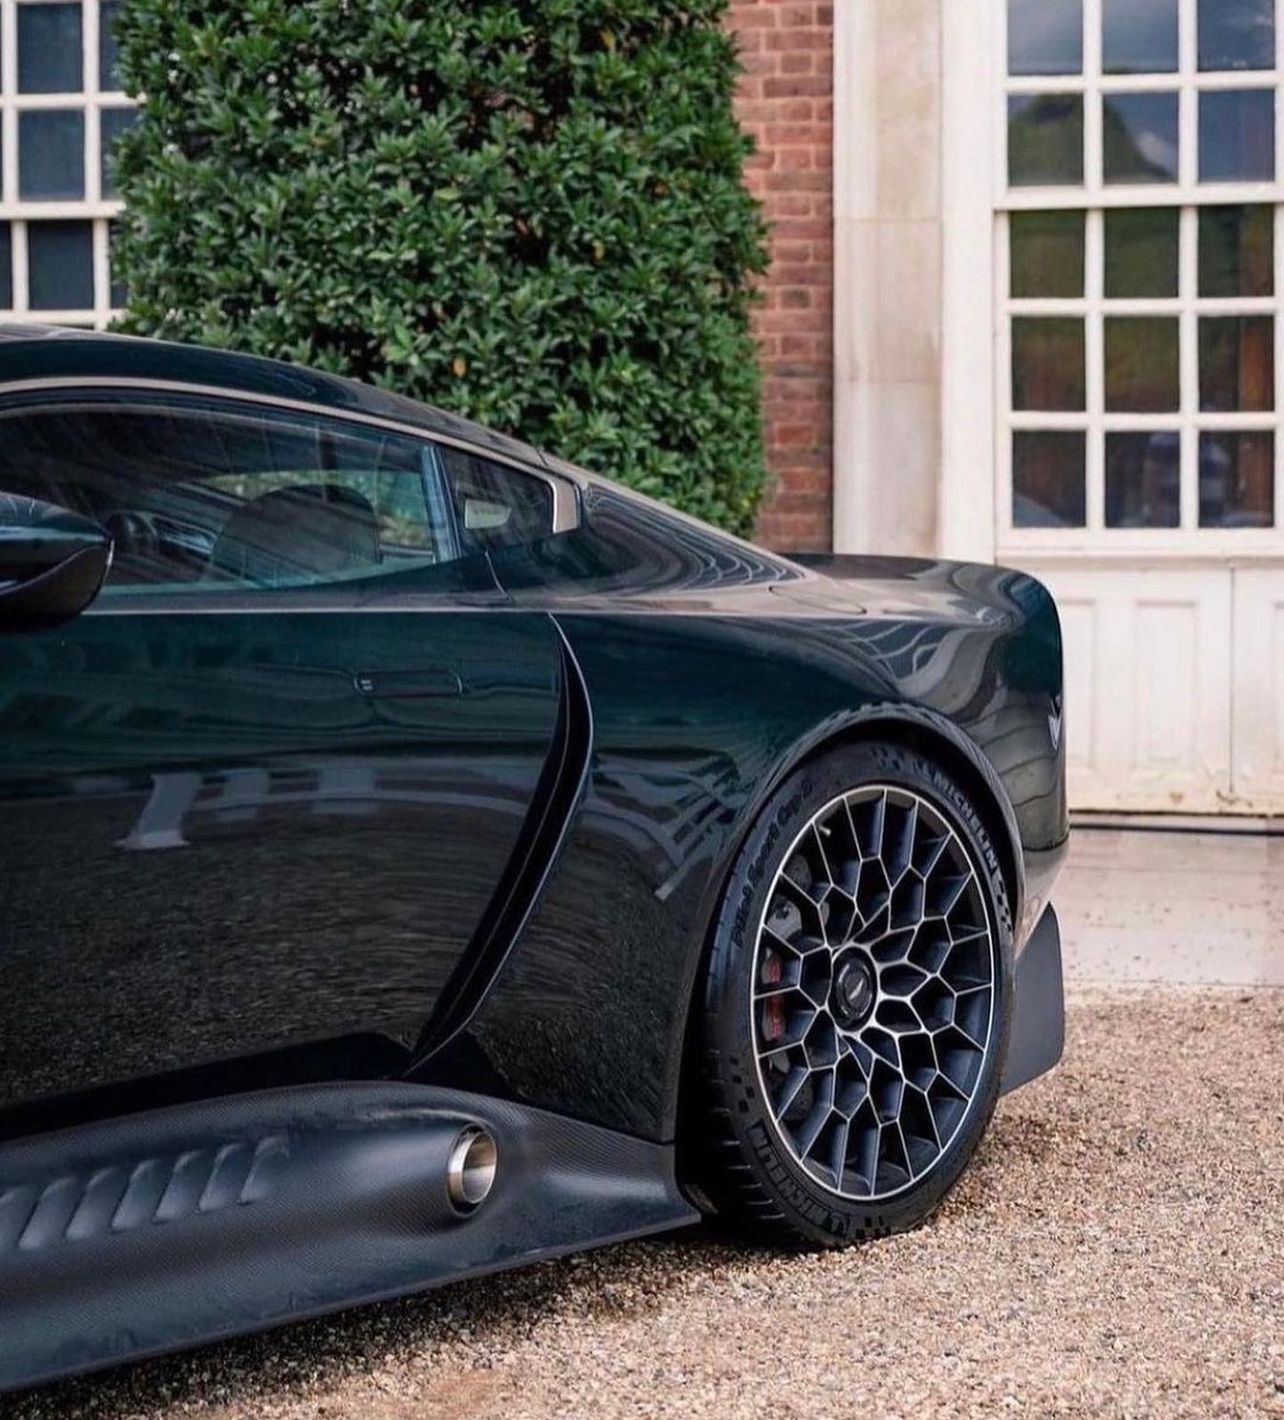 Tires of Green Aston Martin Victor